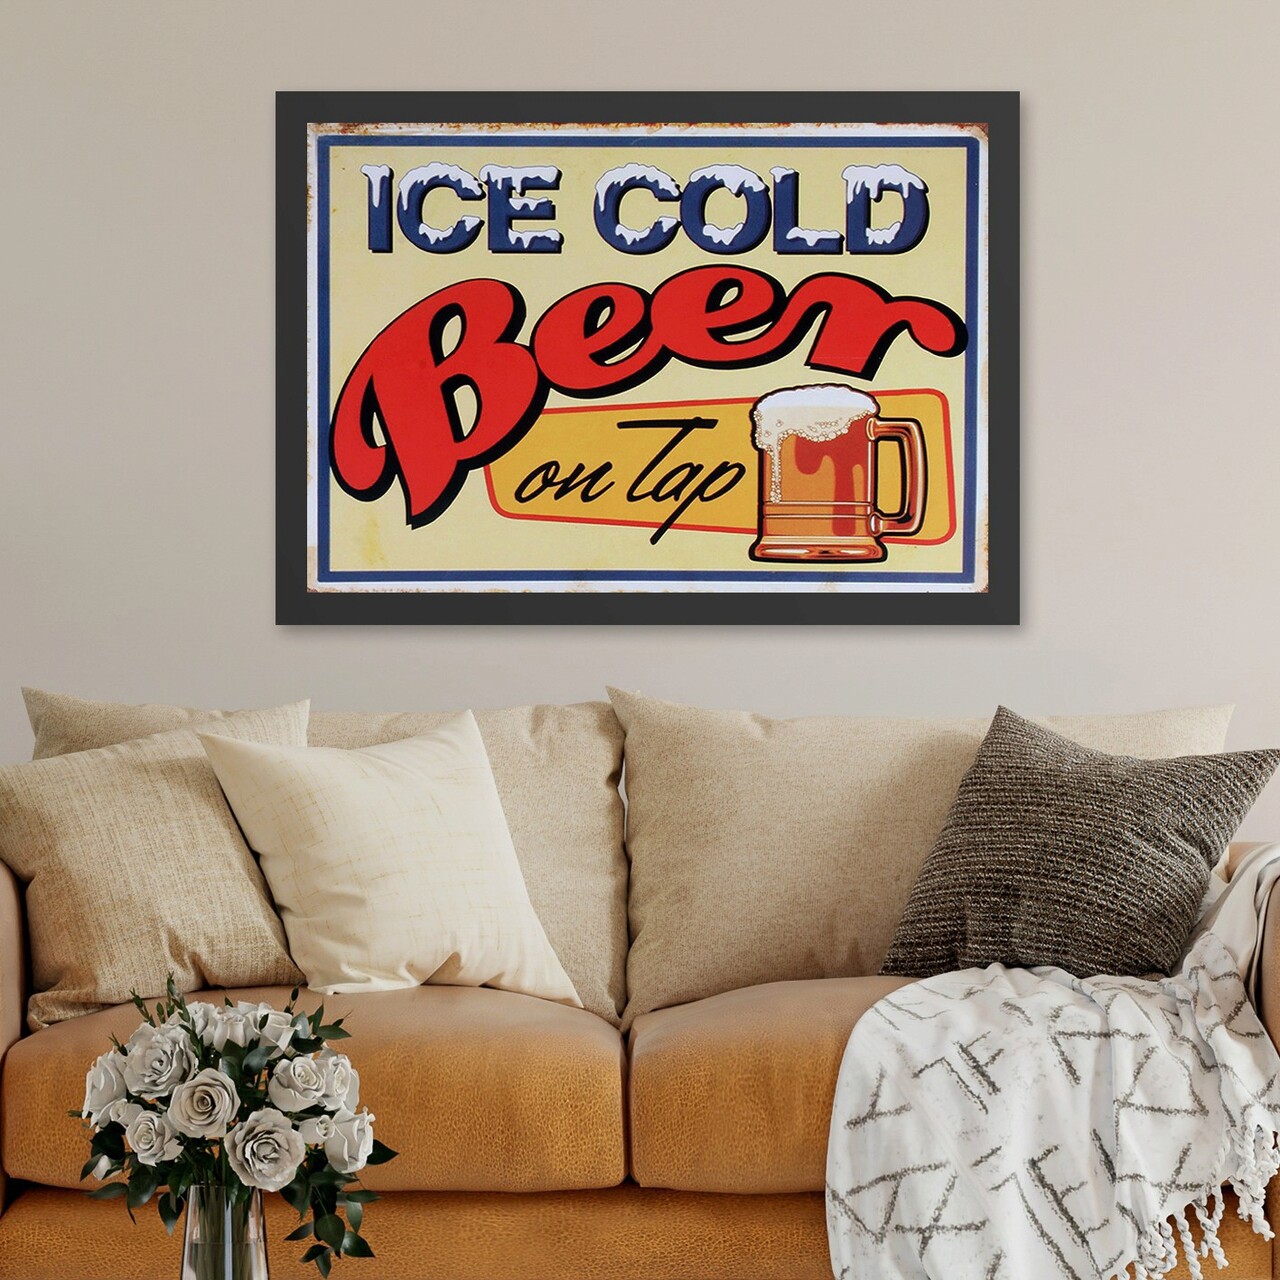 Tablou decorativ, Ice Cold Beer On Tap (55 x 75), MDF , Polistiren, Multicolor